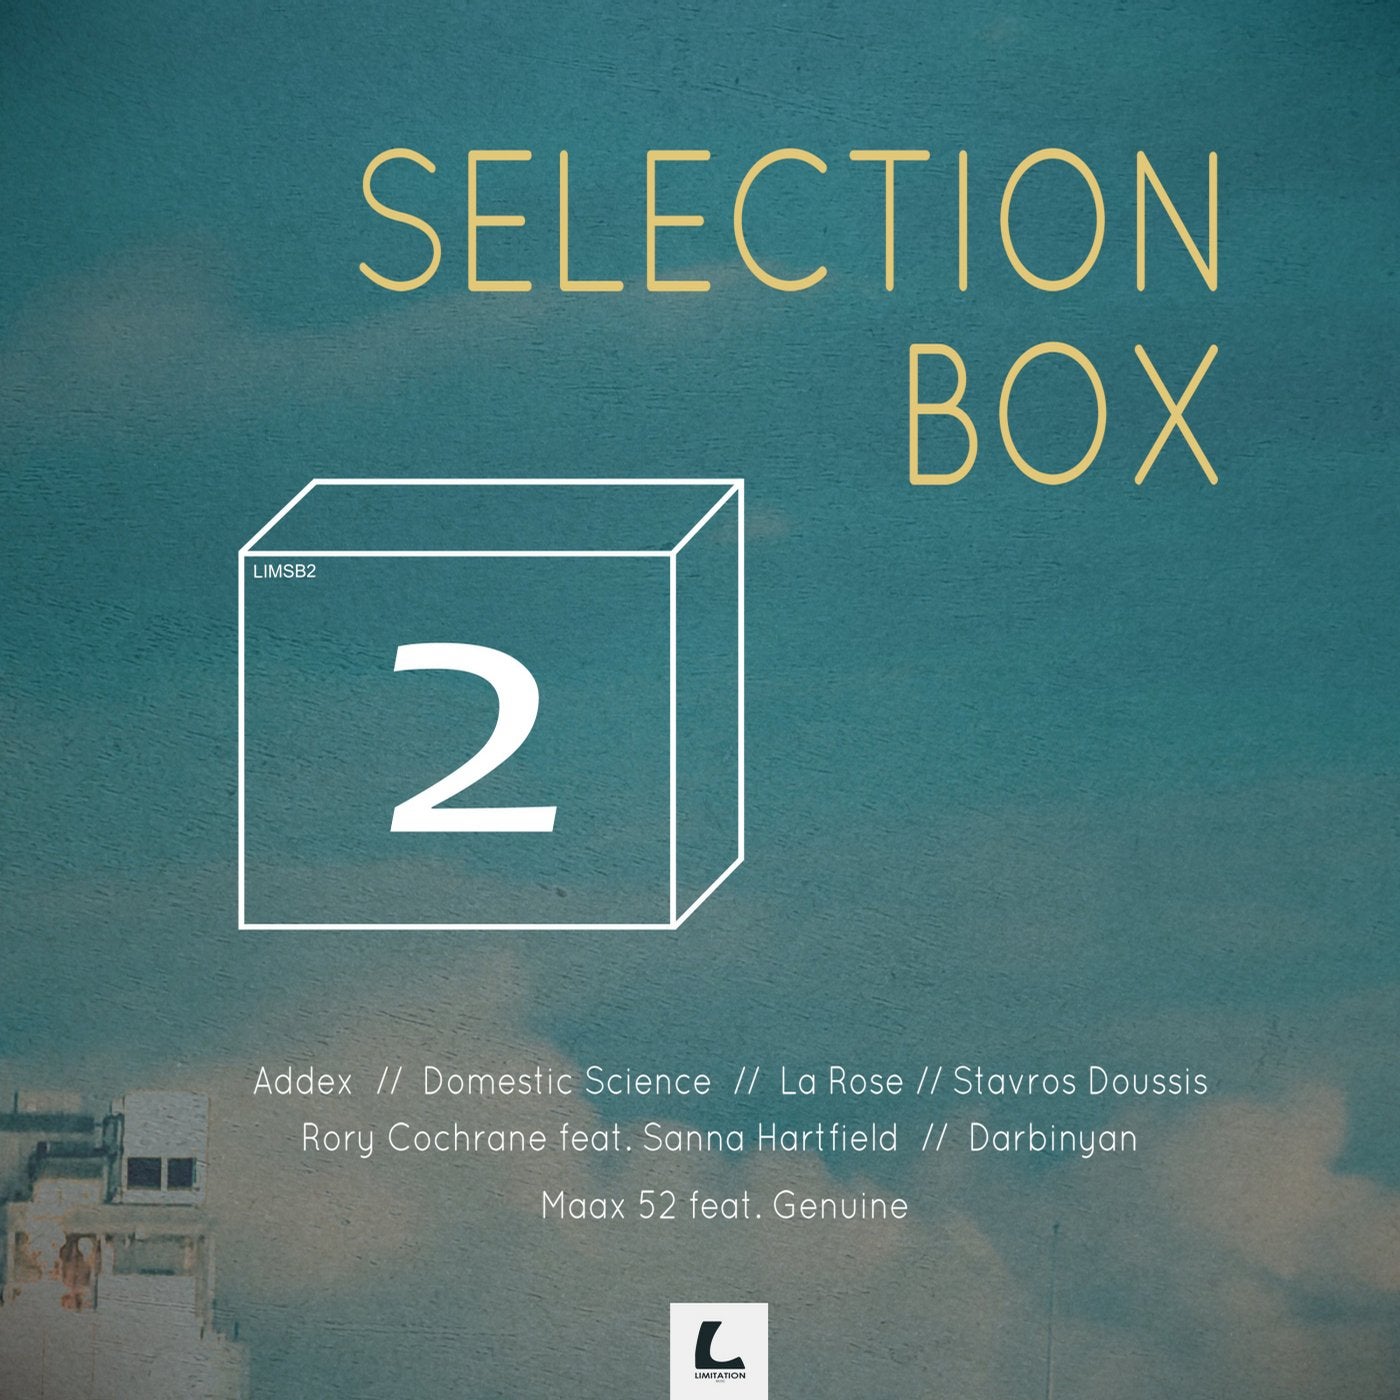 Selection Box 2